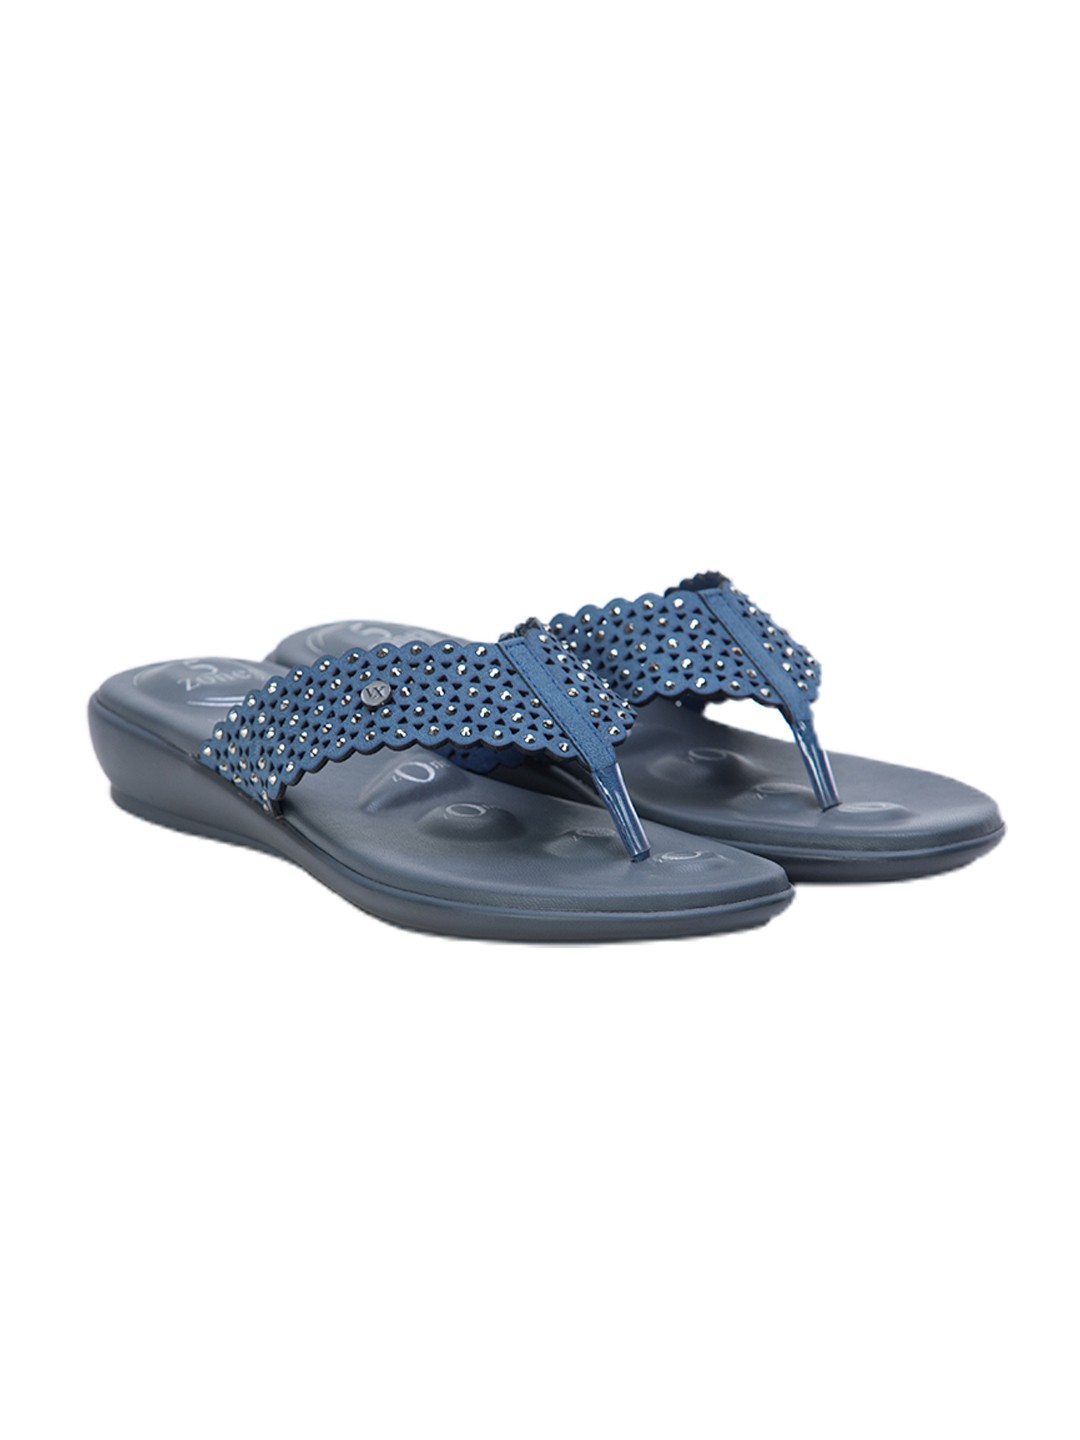 Buy Von Wellx Germany Comfort Gleam Blue Slippers Online in Maharashtra